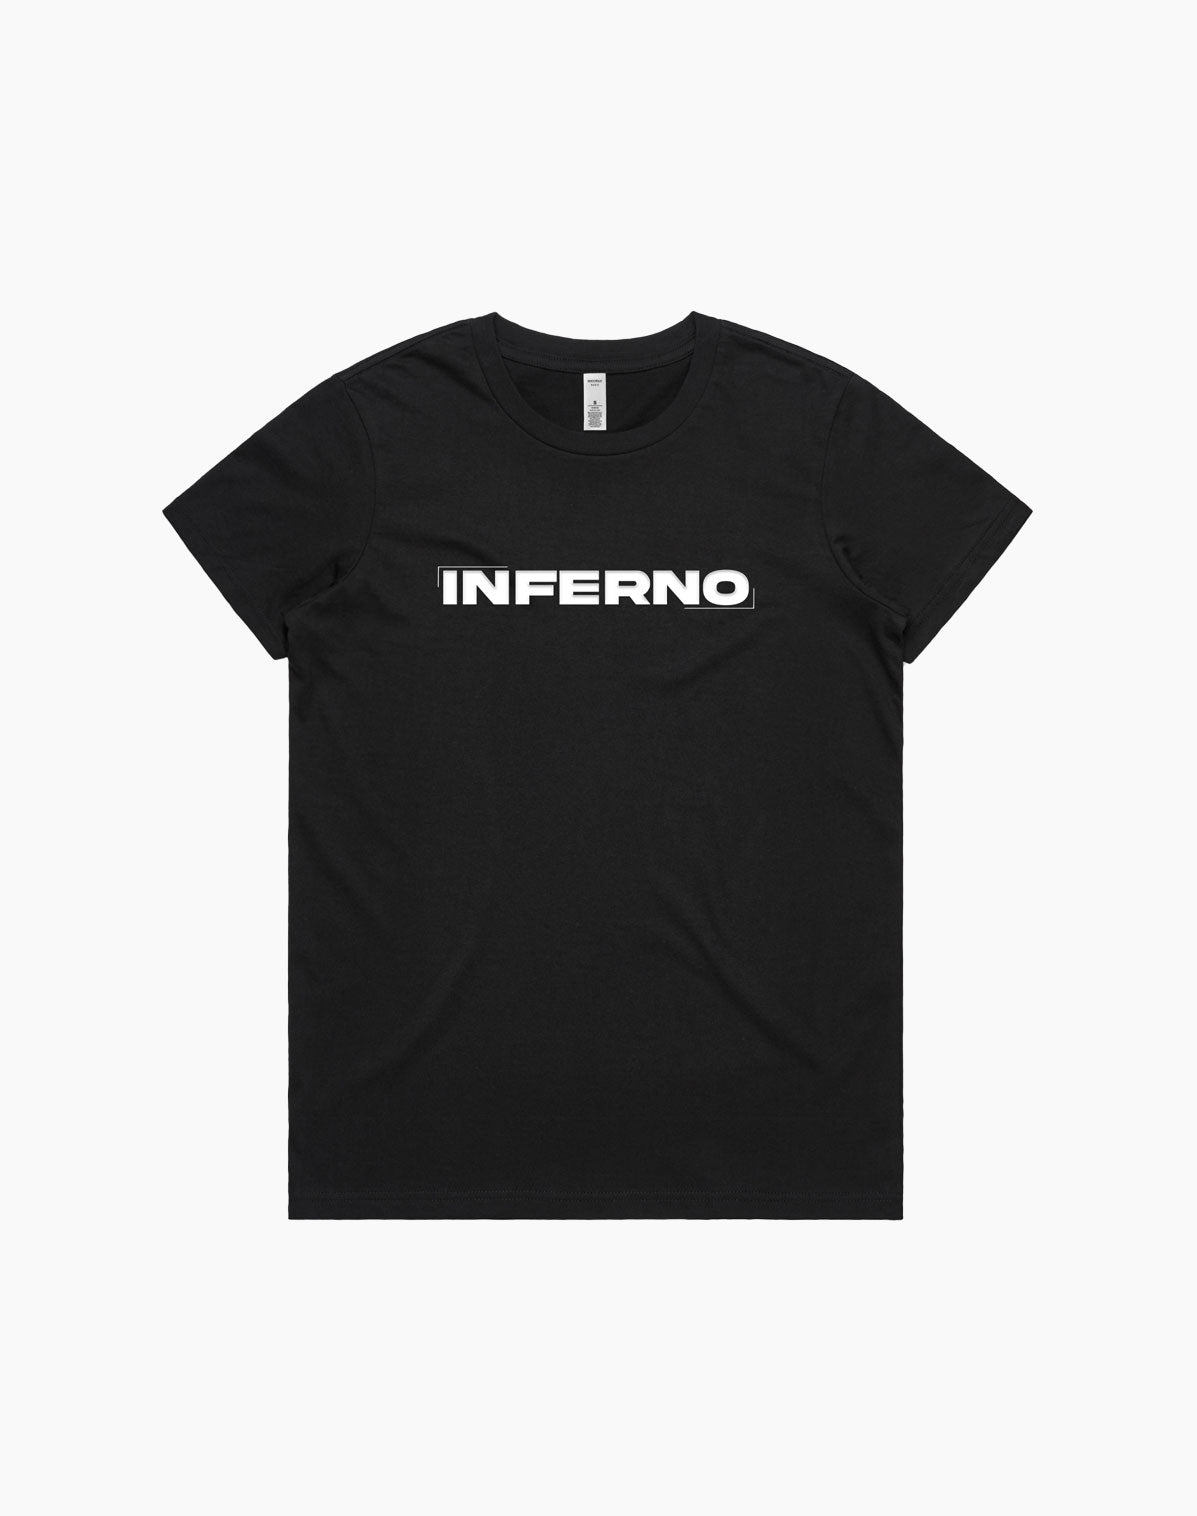 Inferno - Women's Tee